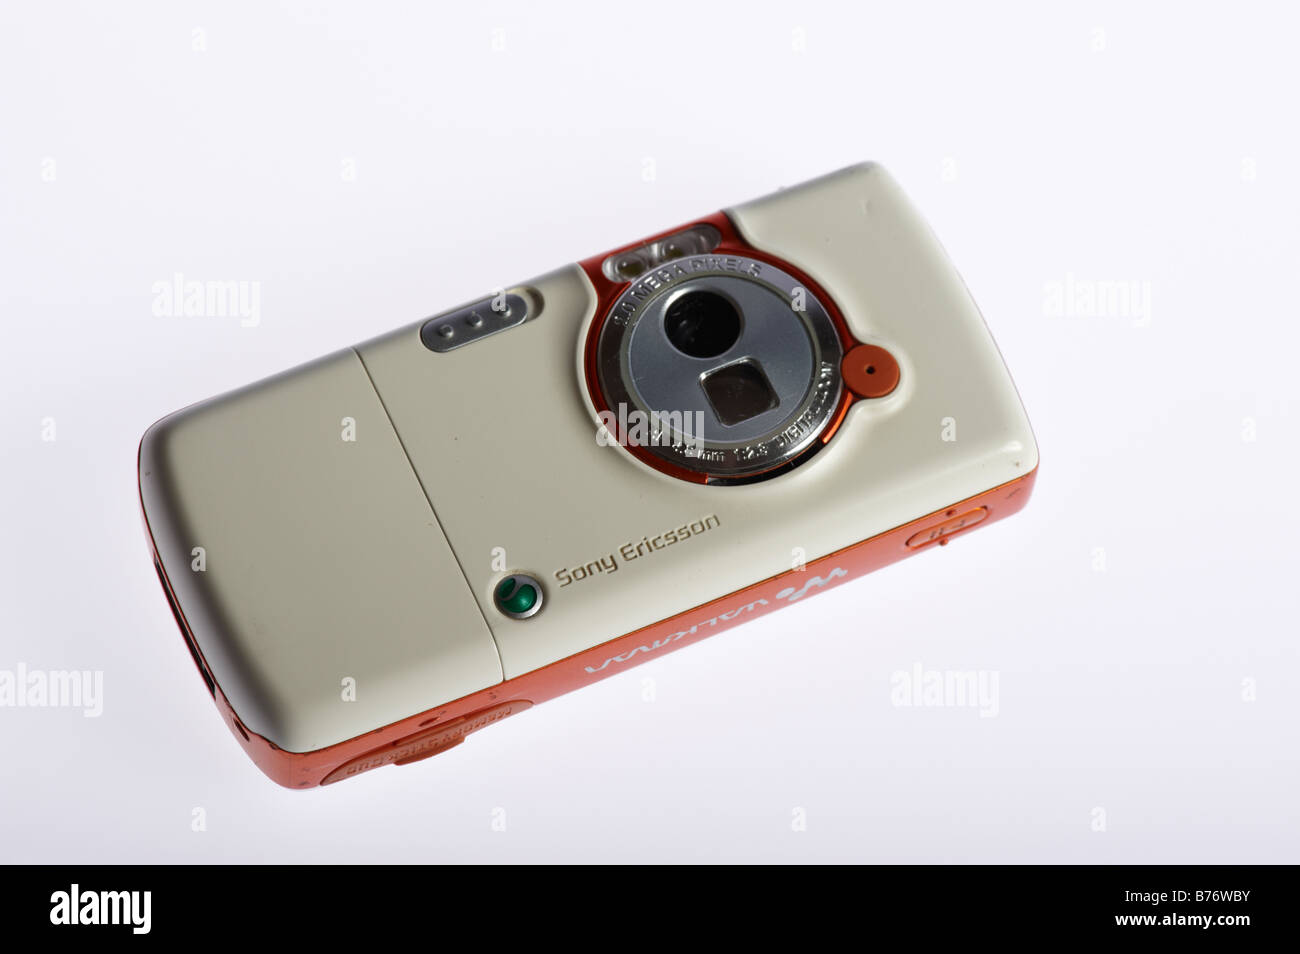 Kamera-Handy Sony Ericsson Stockfoto